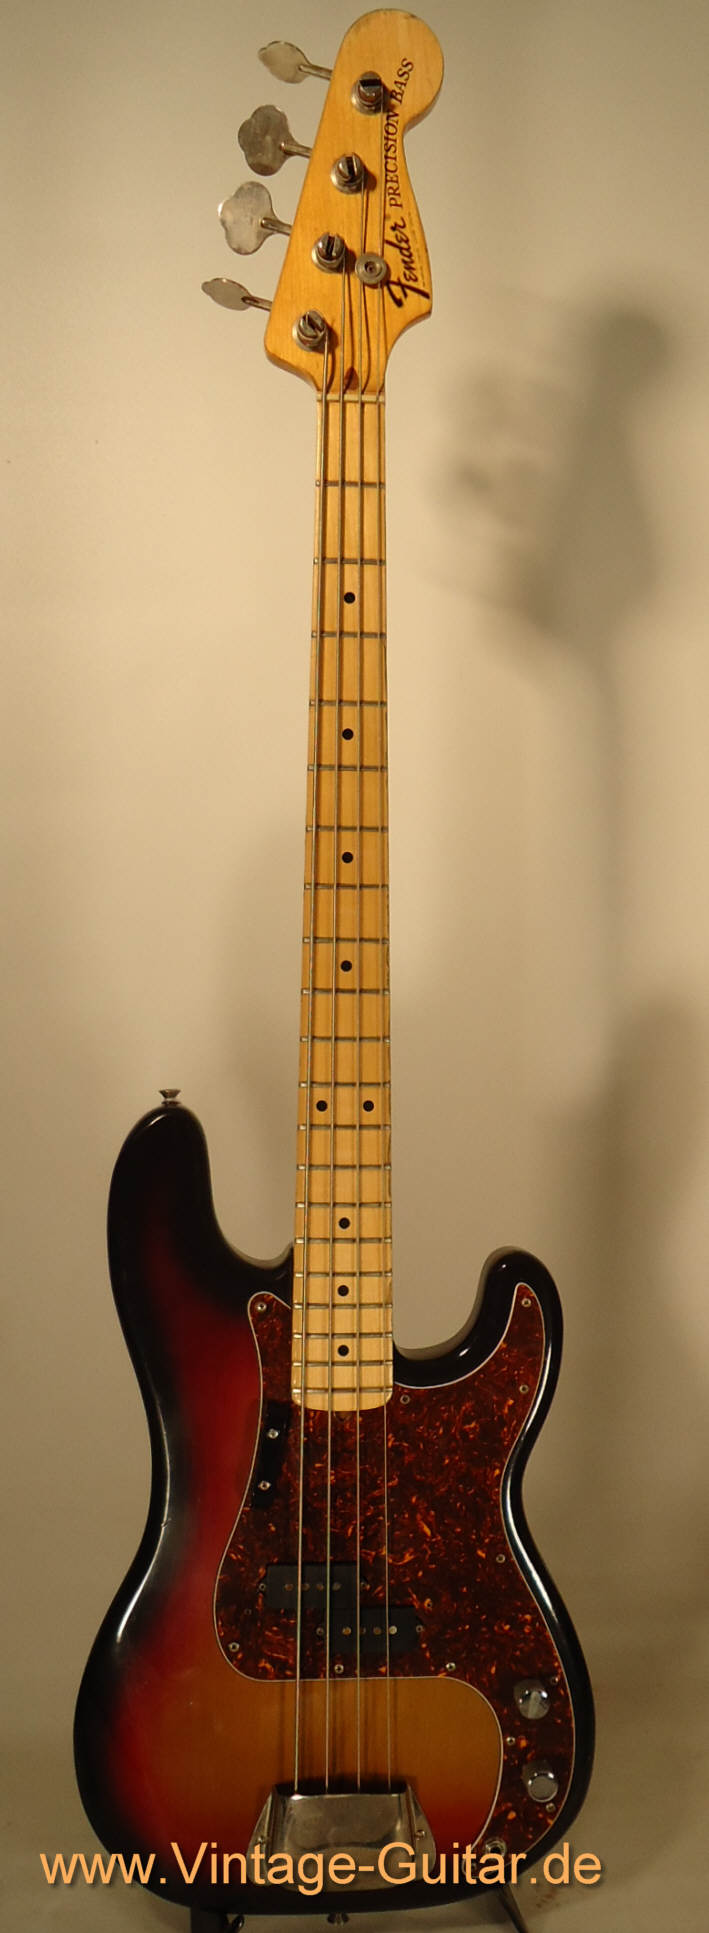 Fender_Precision_Bass_1974_sb_a.jpg